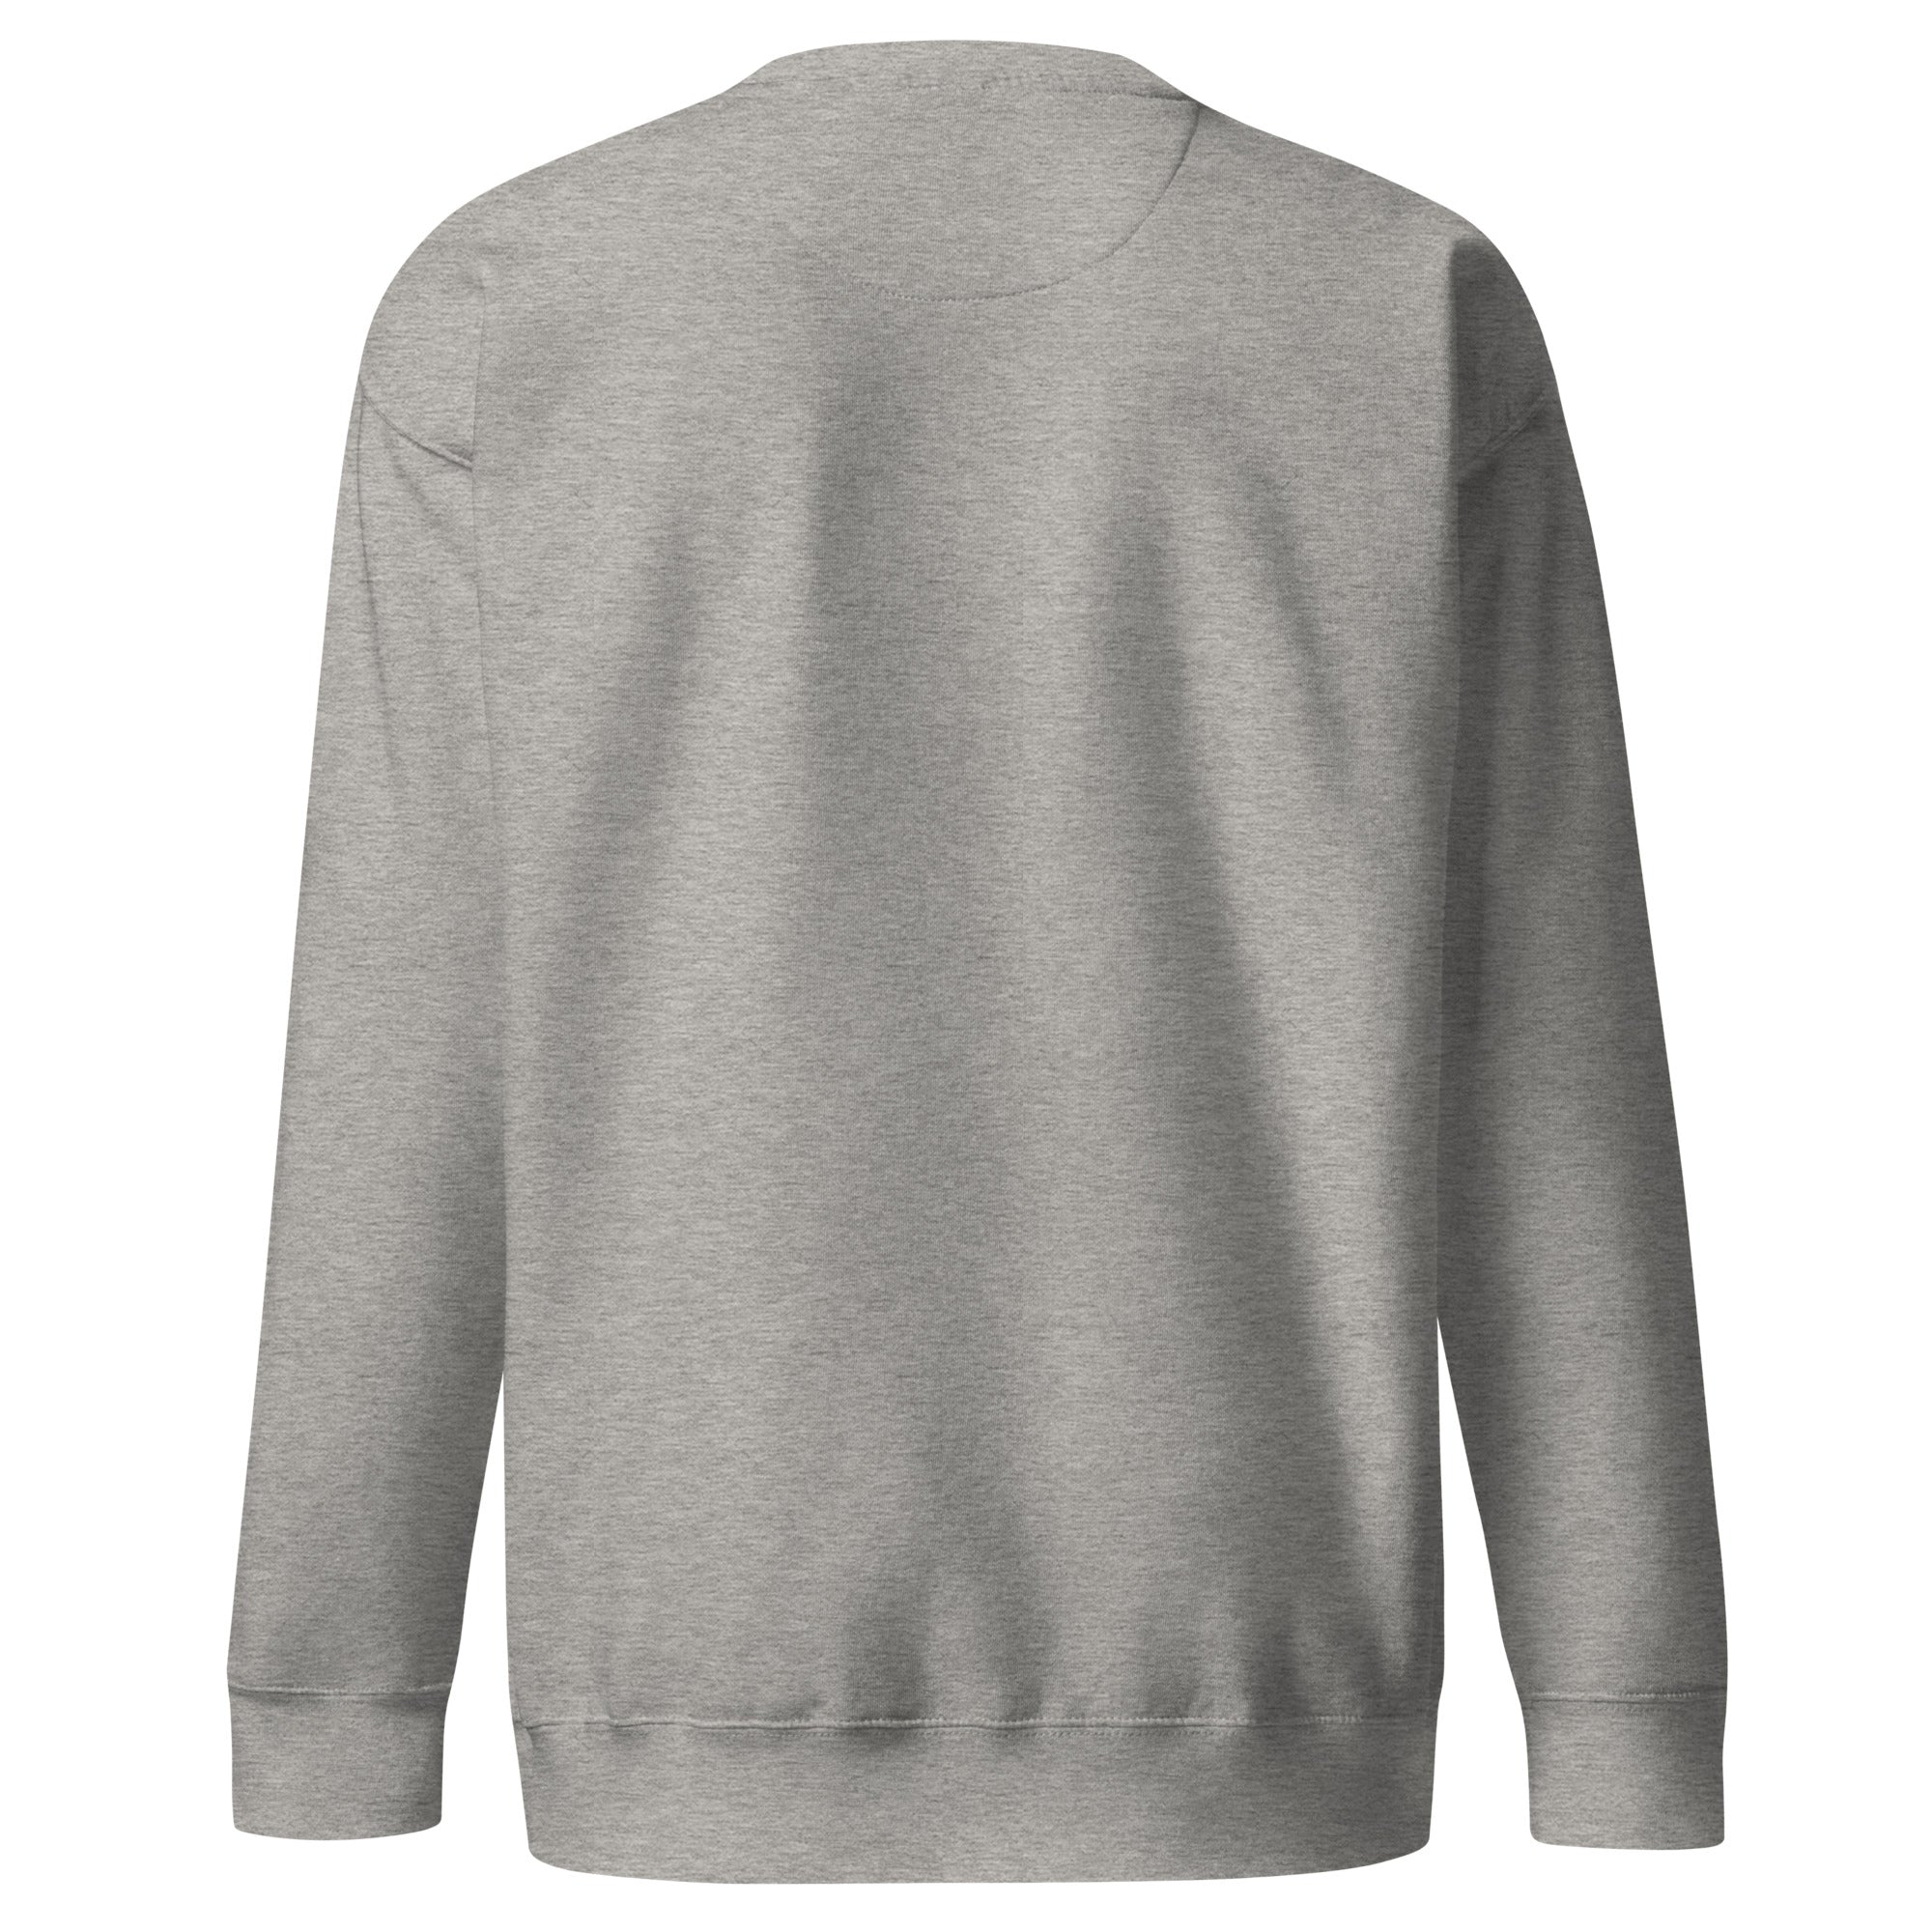 Will Of Fire Embroidered Premium Crewneck Sweatshirt